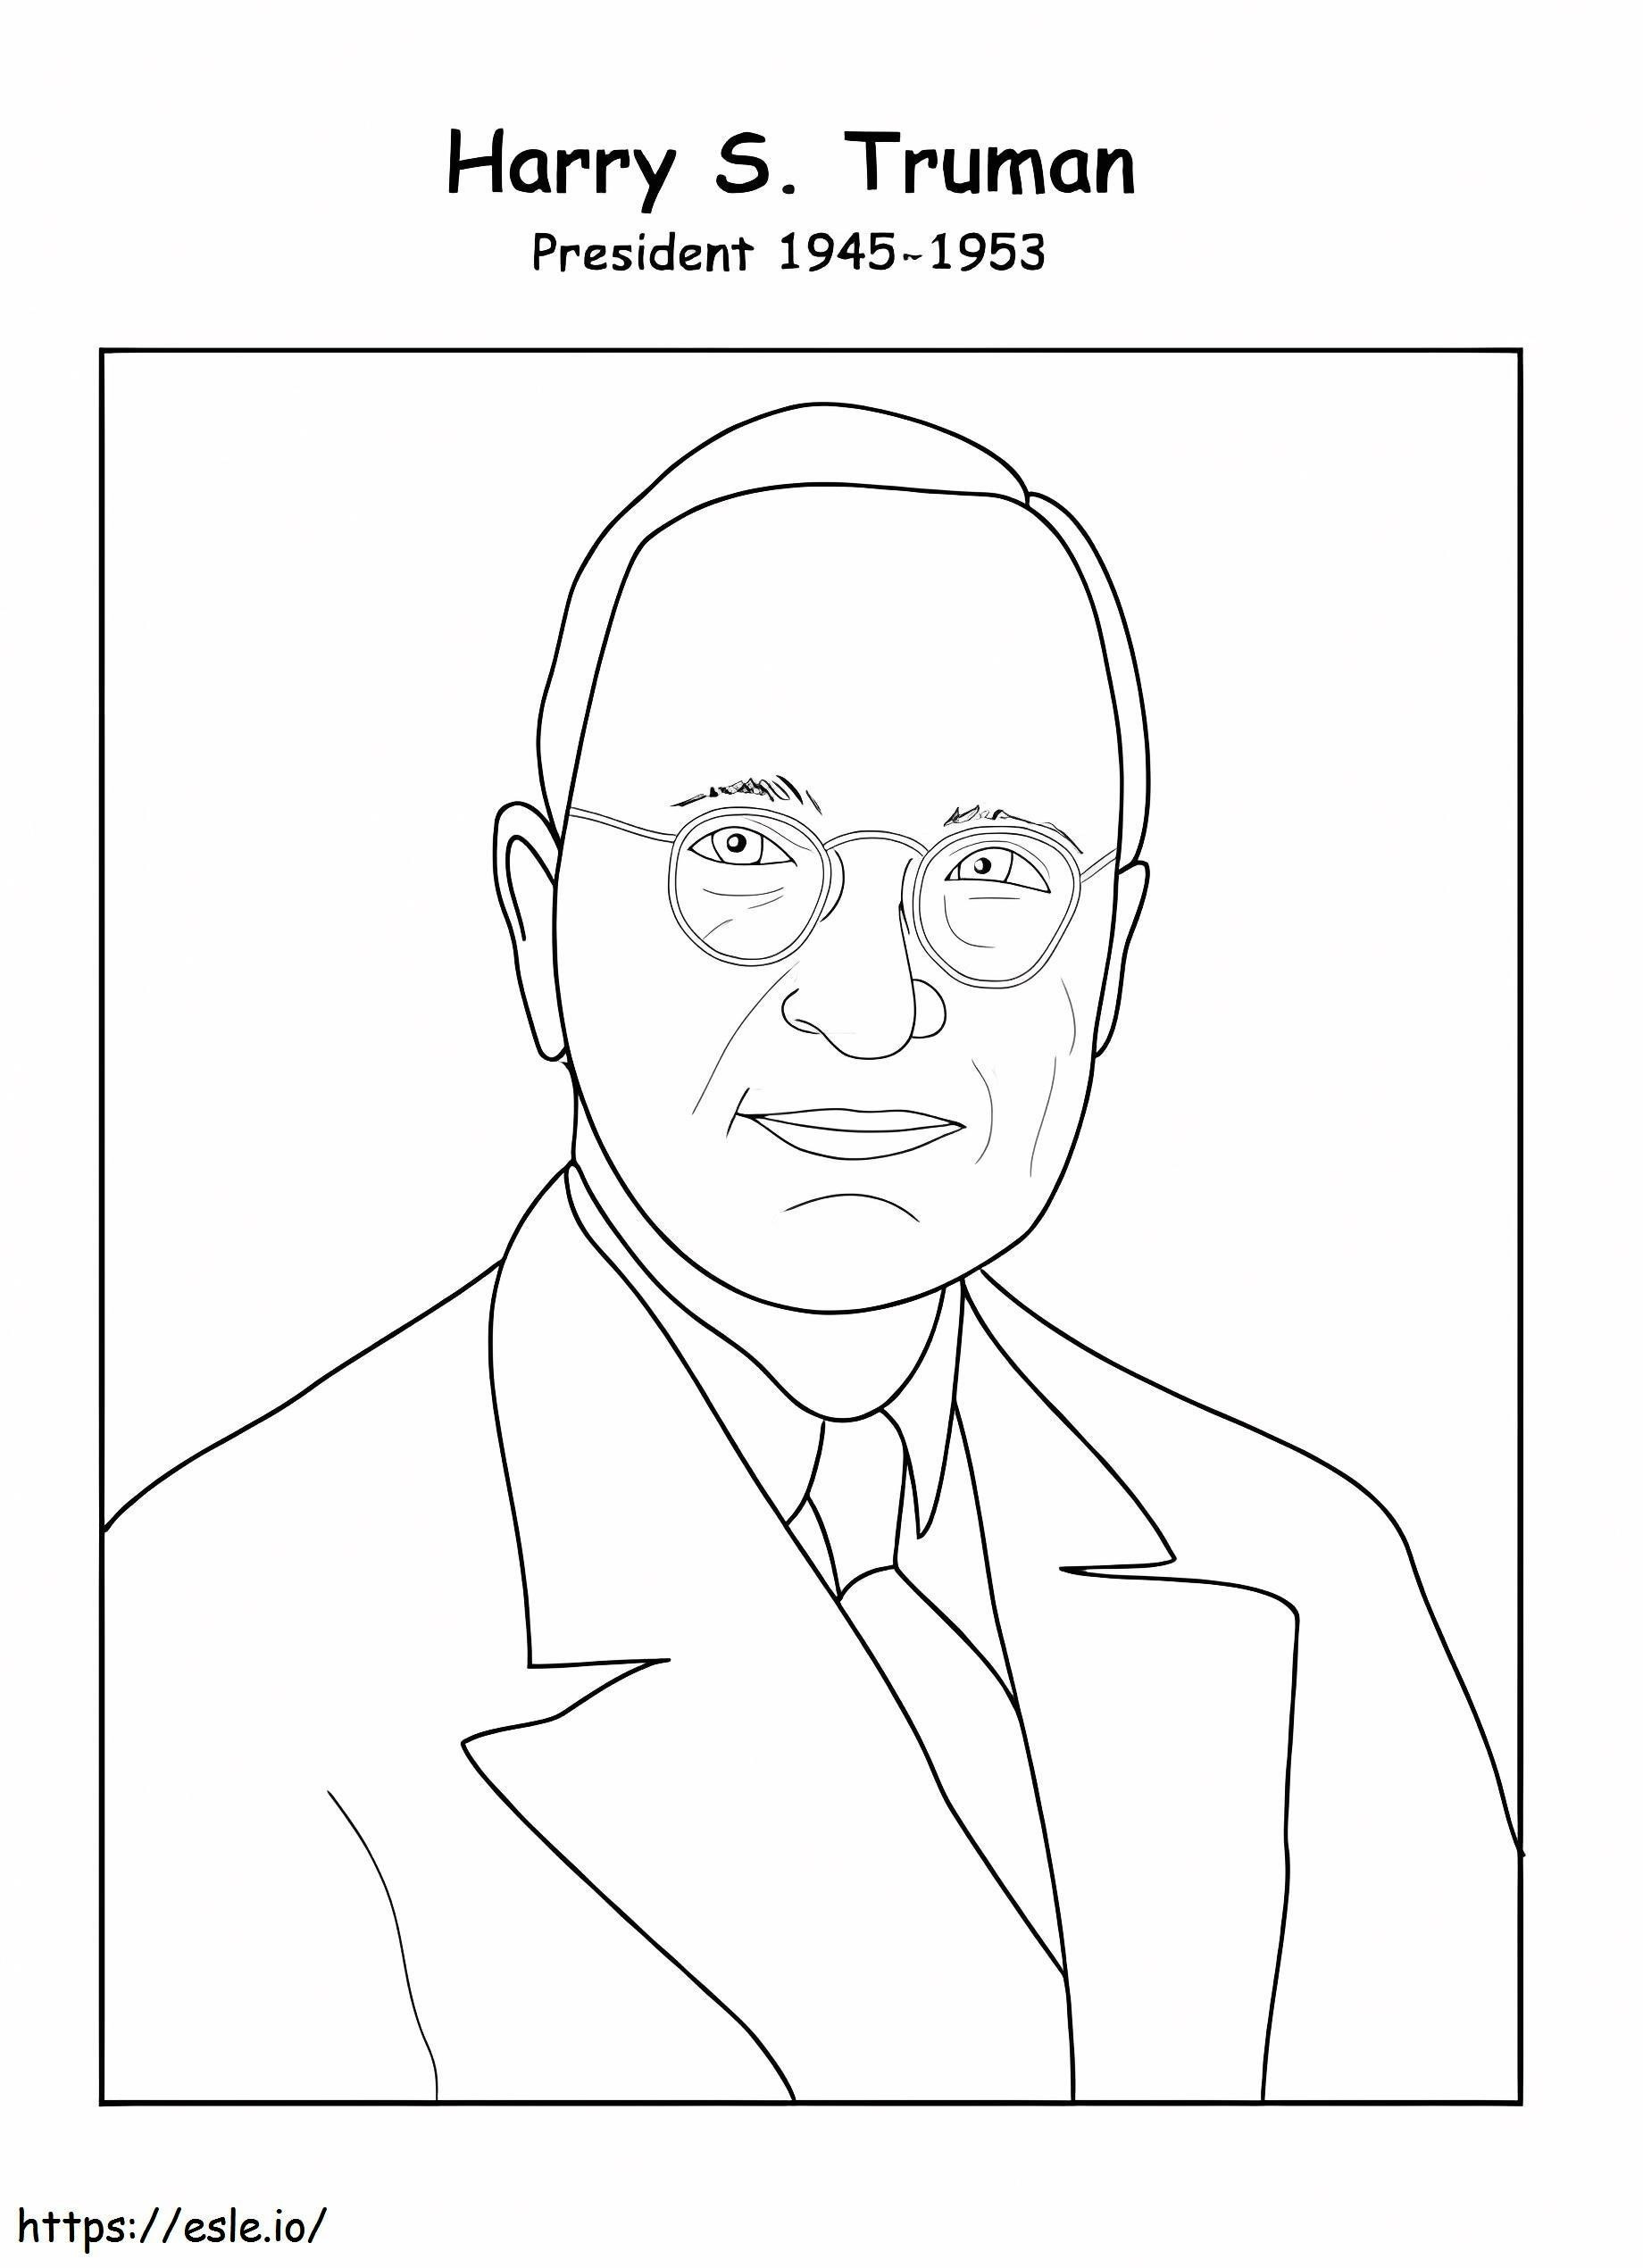 Harry S. Truman para imprimir gratis para colorear